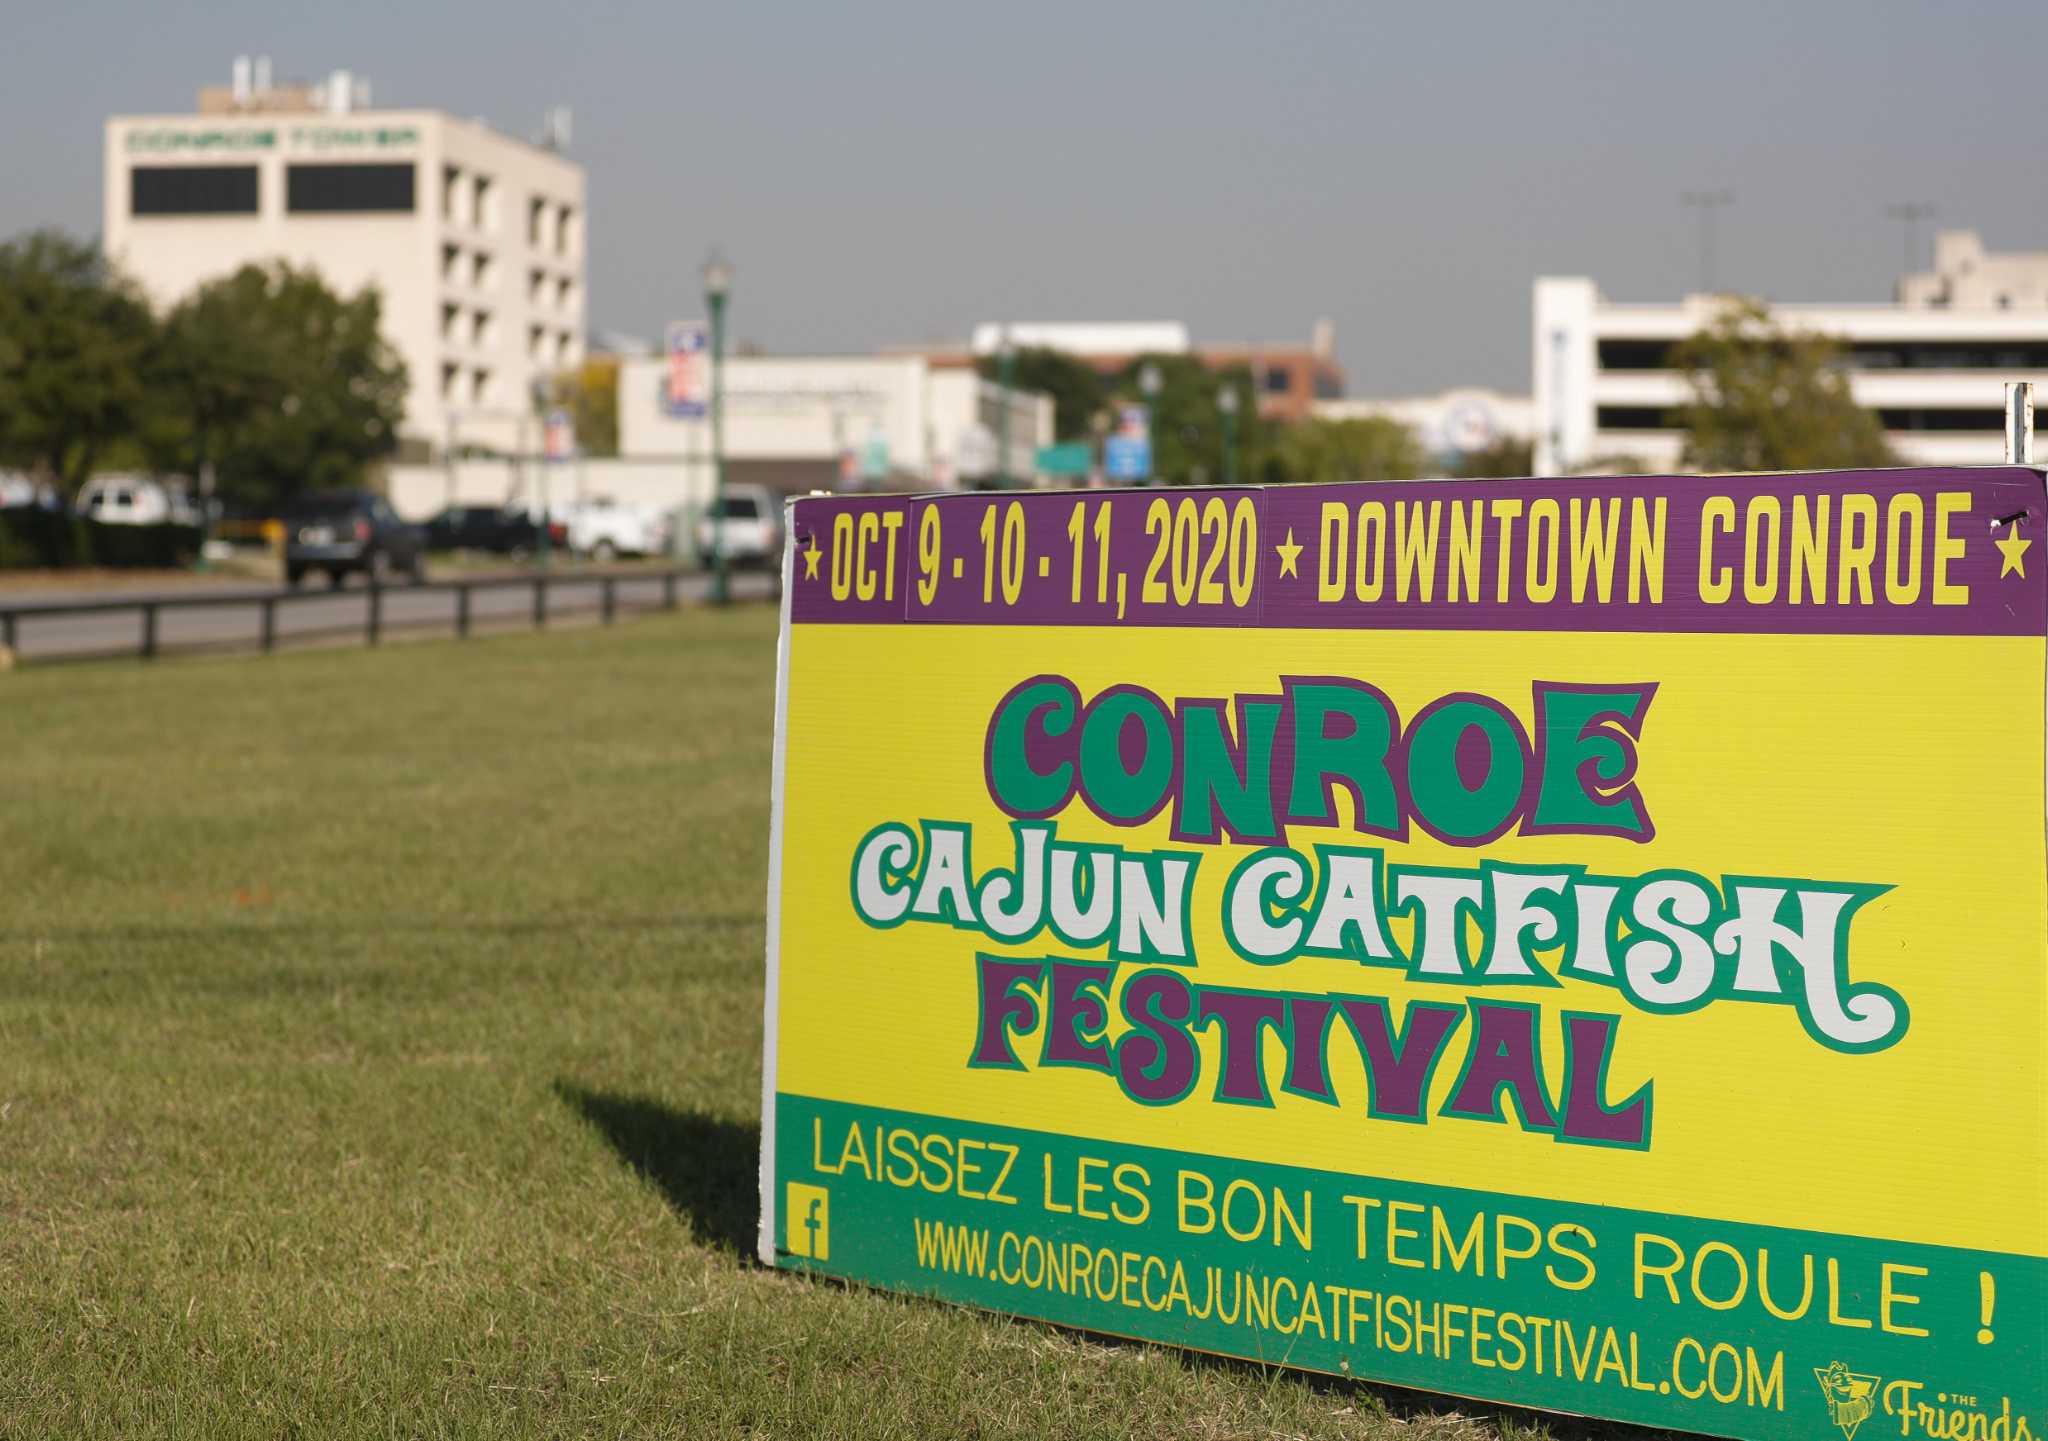 Conroe Cajun Catfish Festival brings slate of entertainment downtown